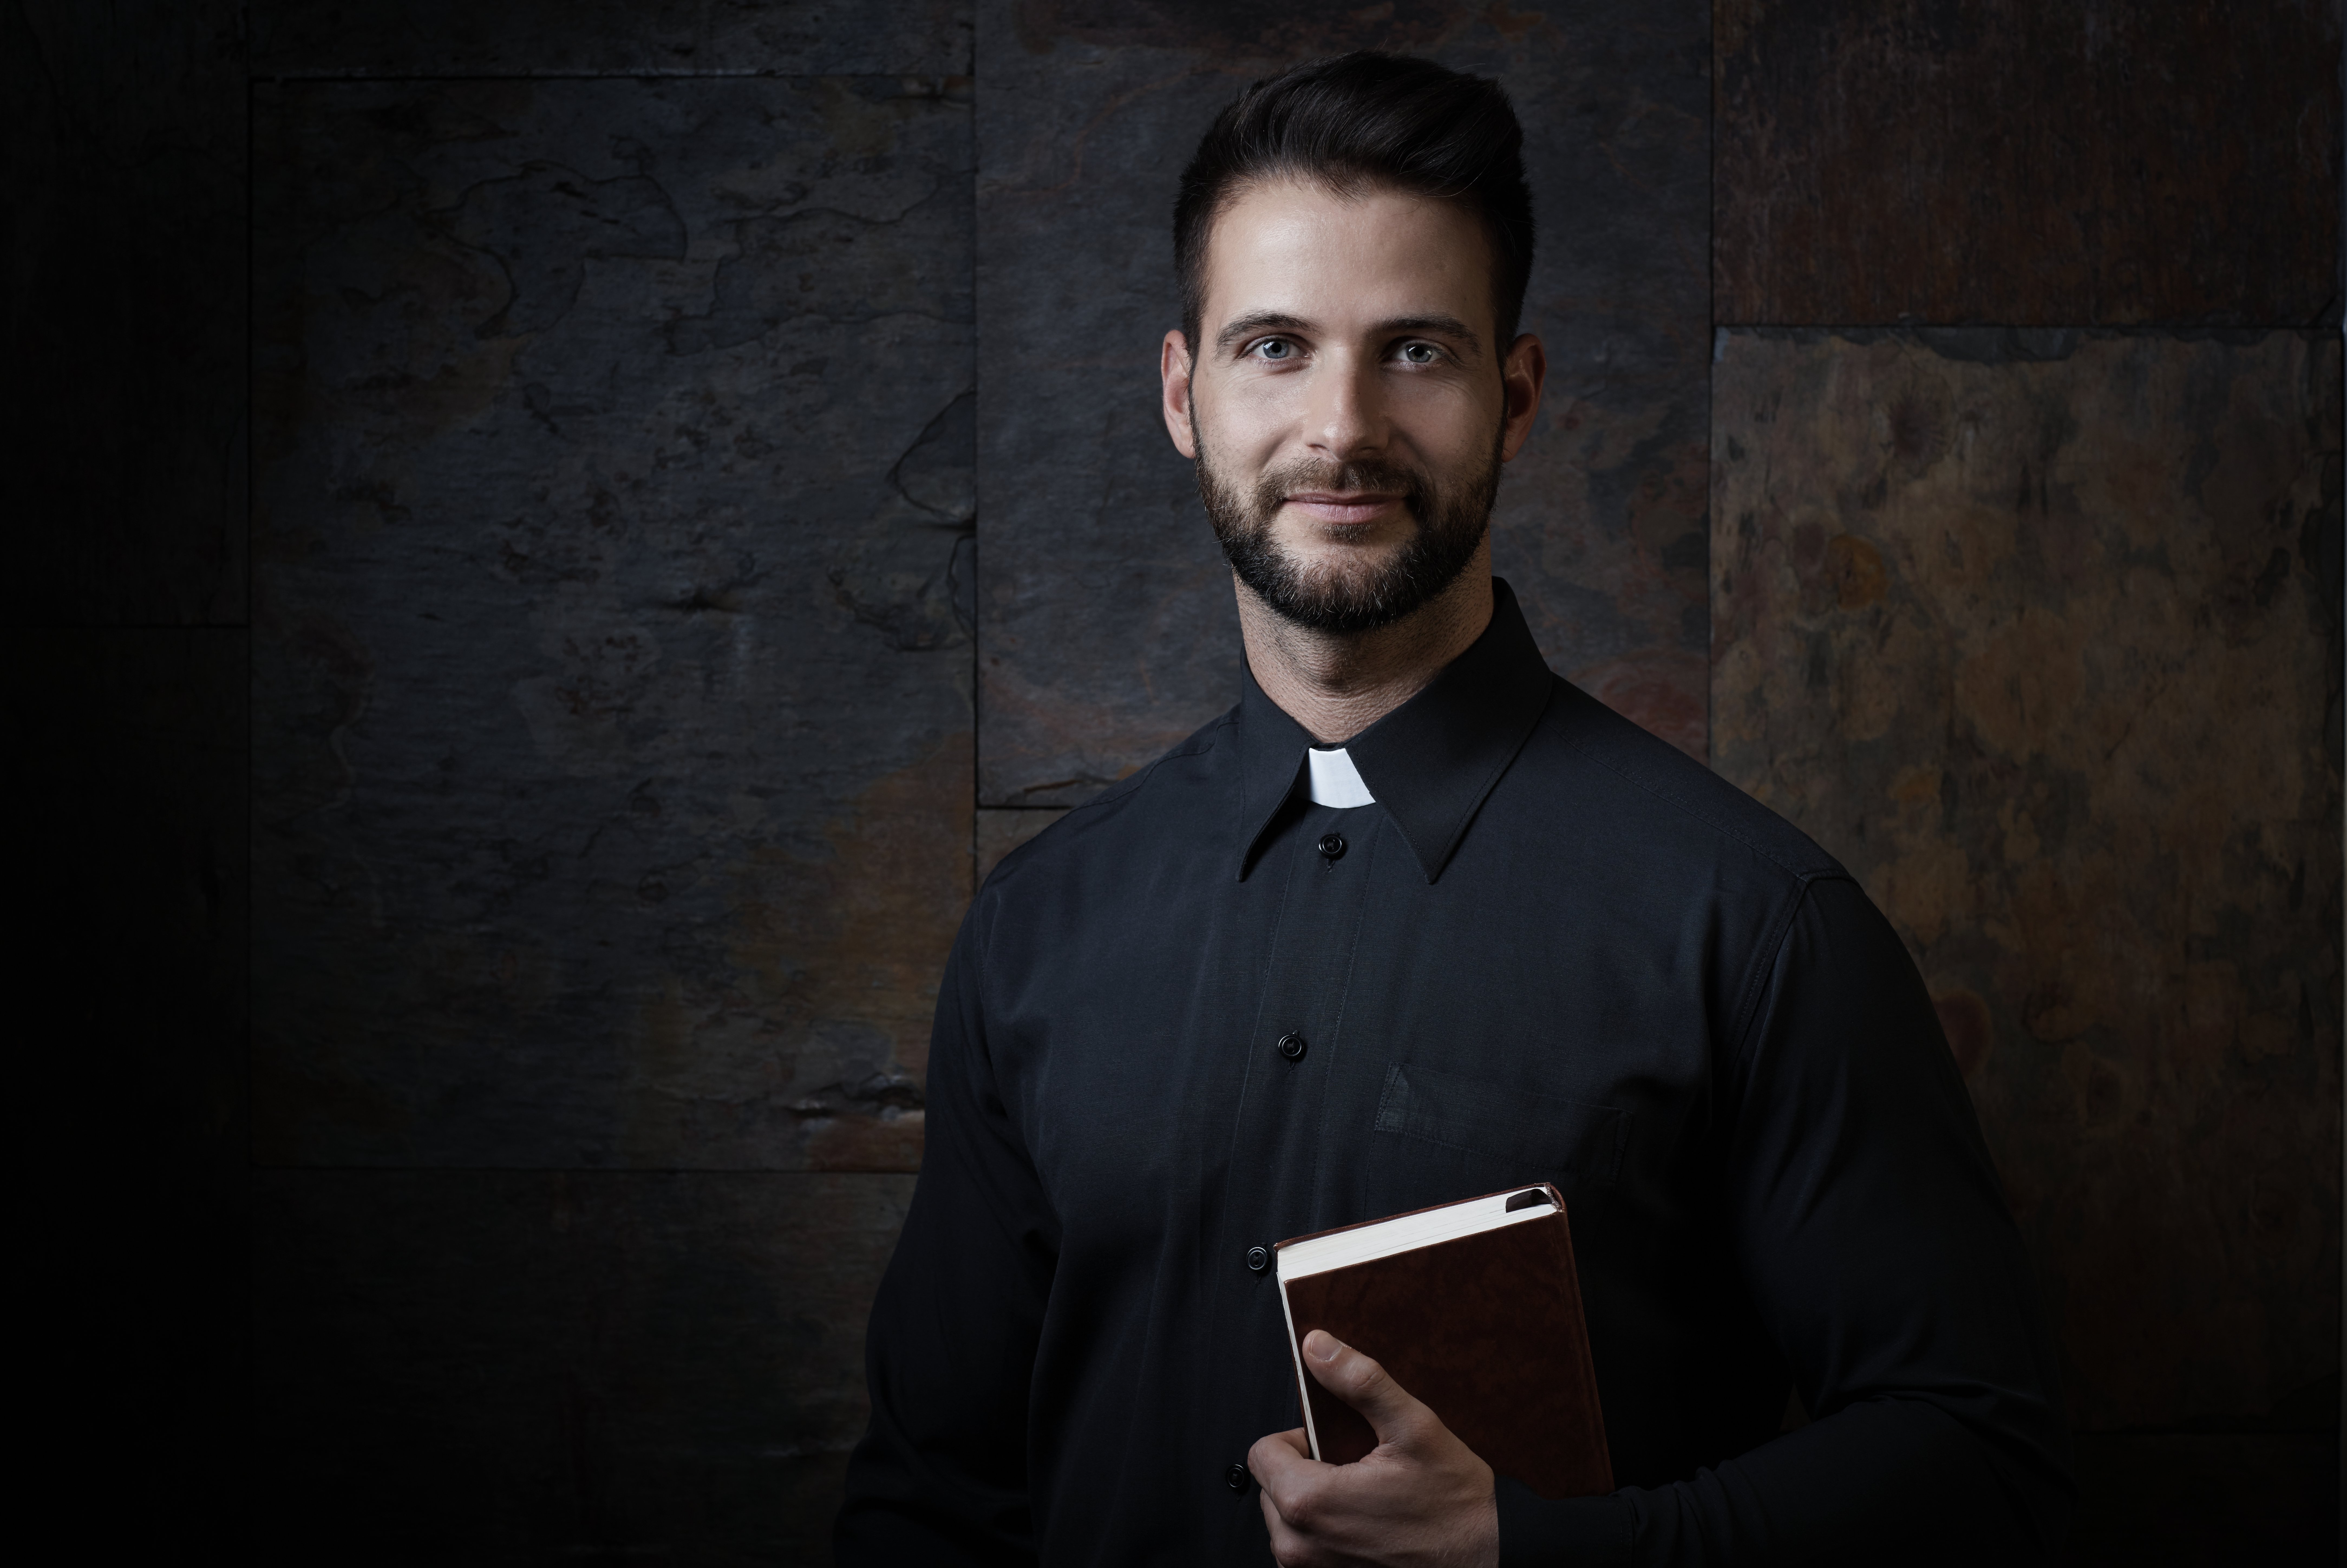 Priester | Quelle: Shutterstock